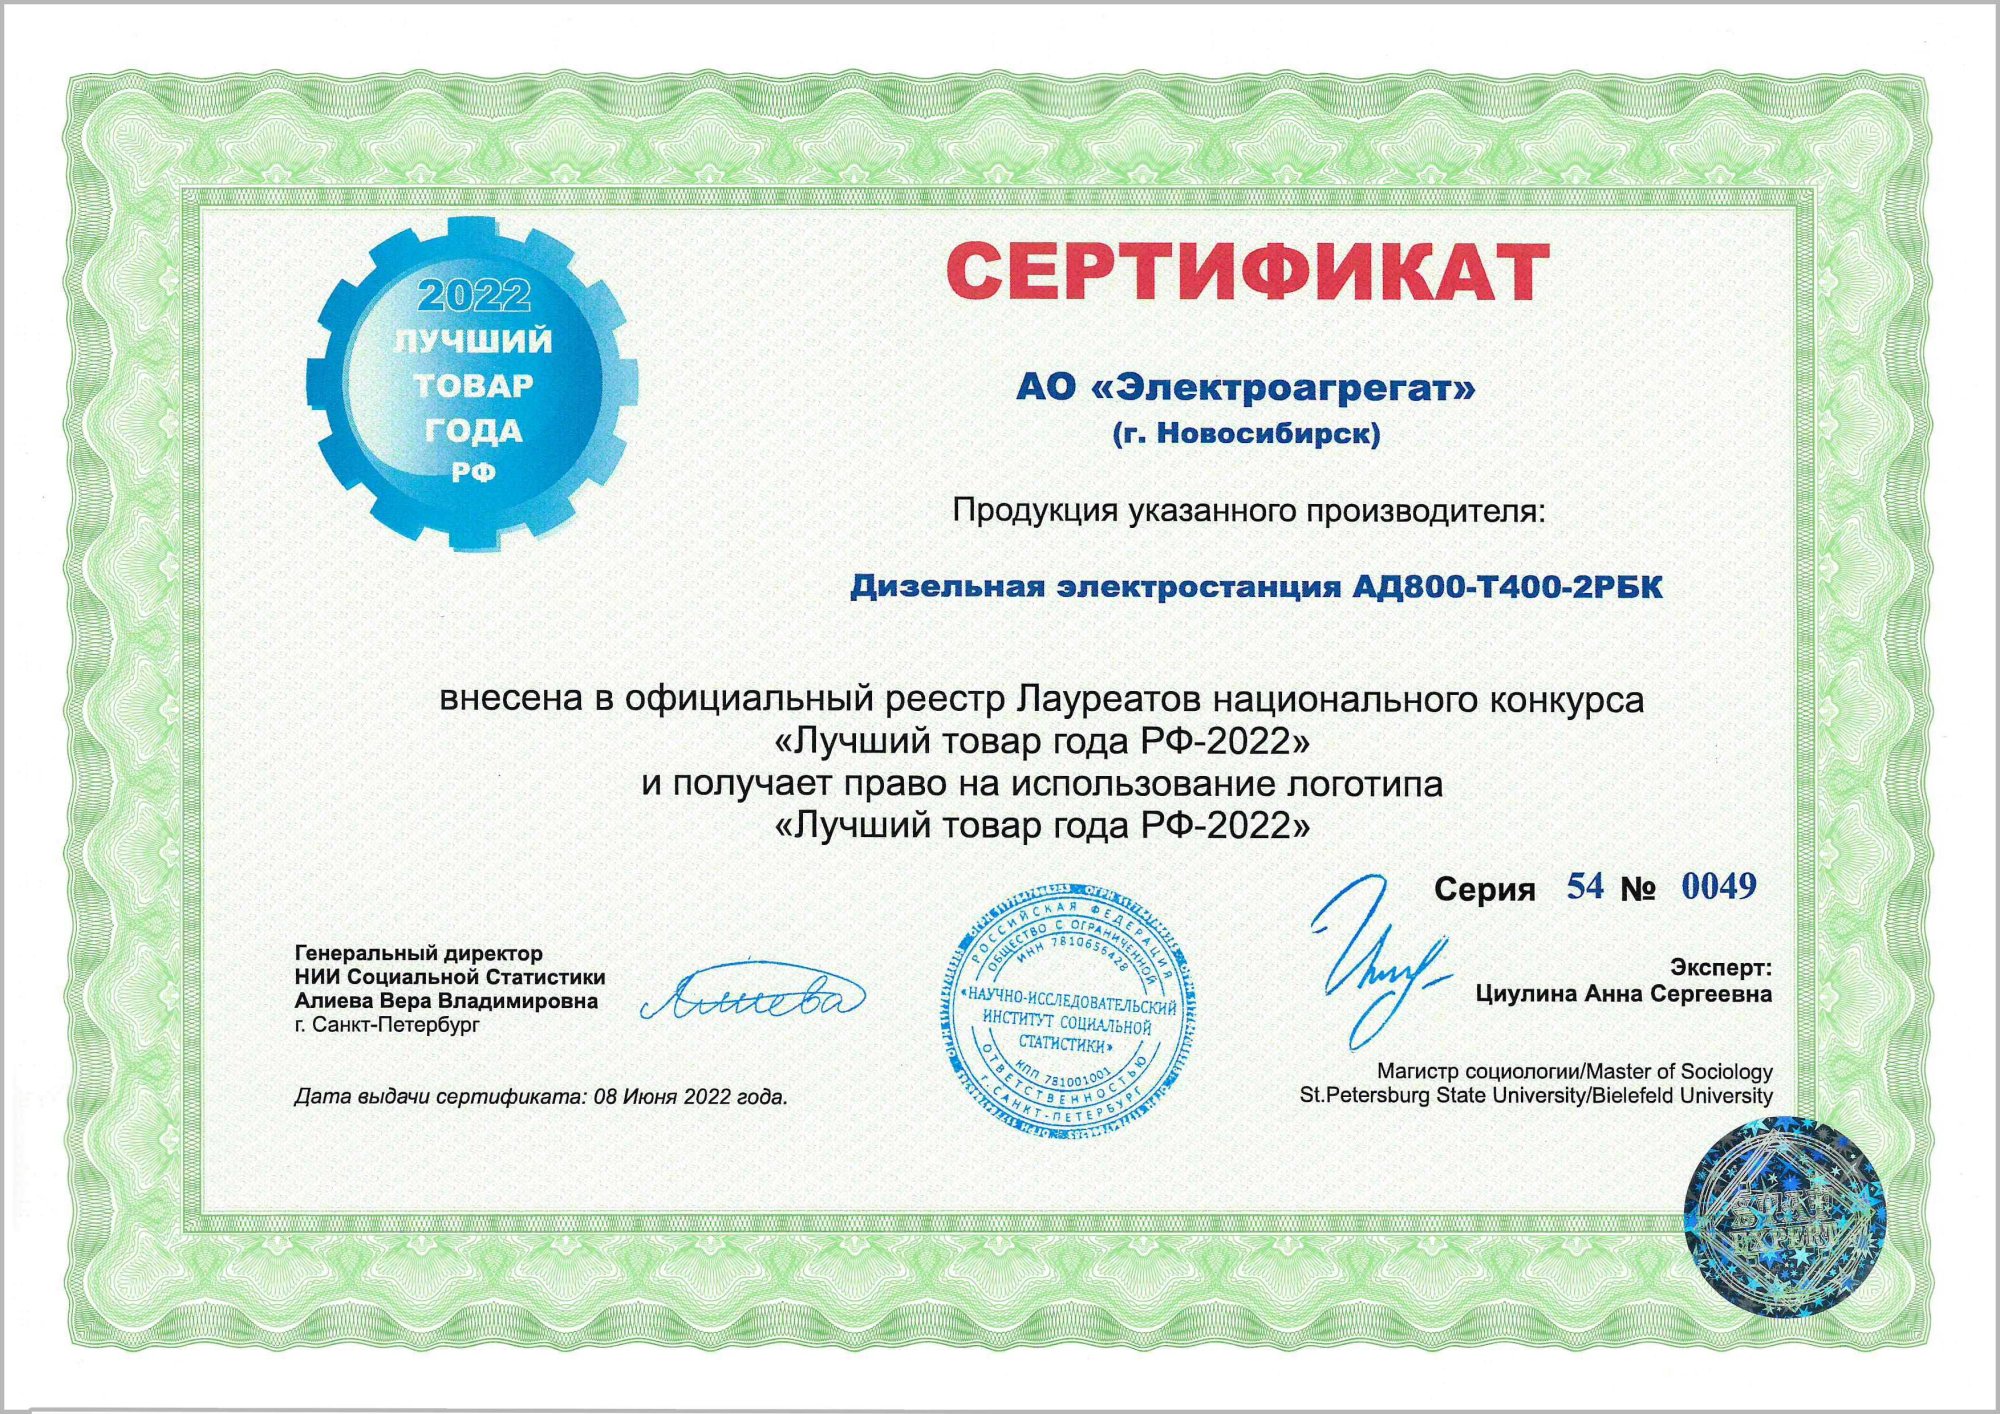 Сертификат АО Электроагрегат на ДГУ АД800-Т400-2РБК. Лучший товар года 2022